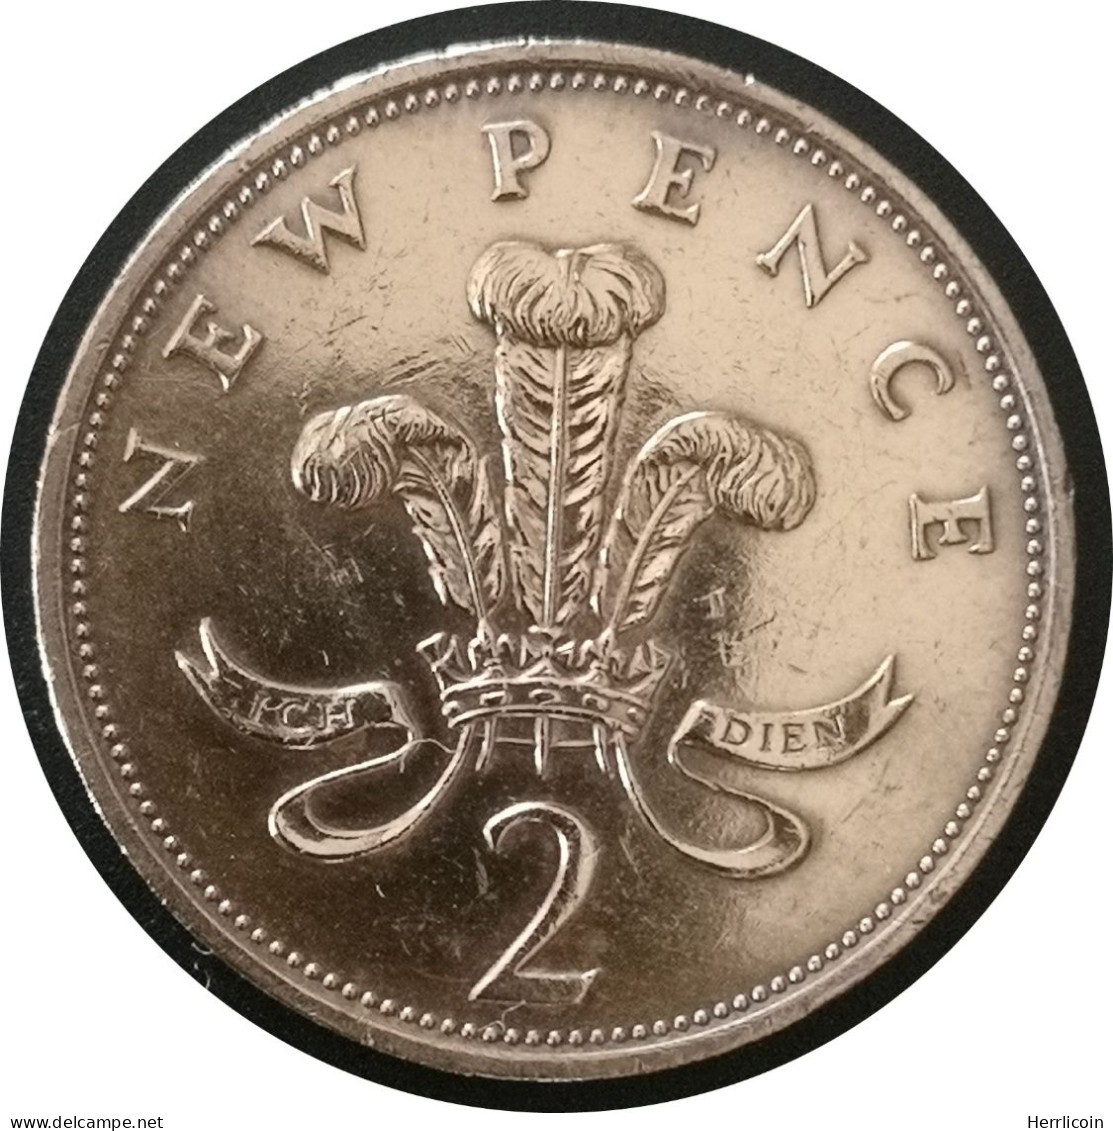 Monnaie 1978 - Royaume Uni - 2 New Pence Elizabeth II 2e Effigie - [KM#916] - 2 Pence & 2 New Pence